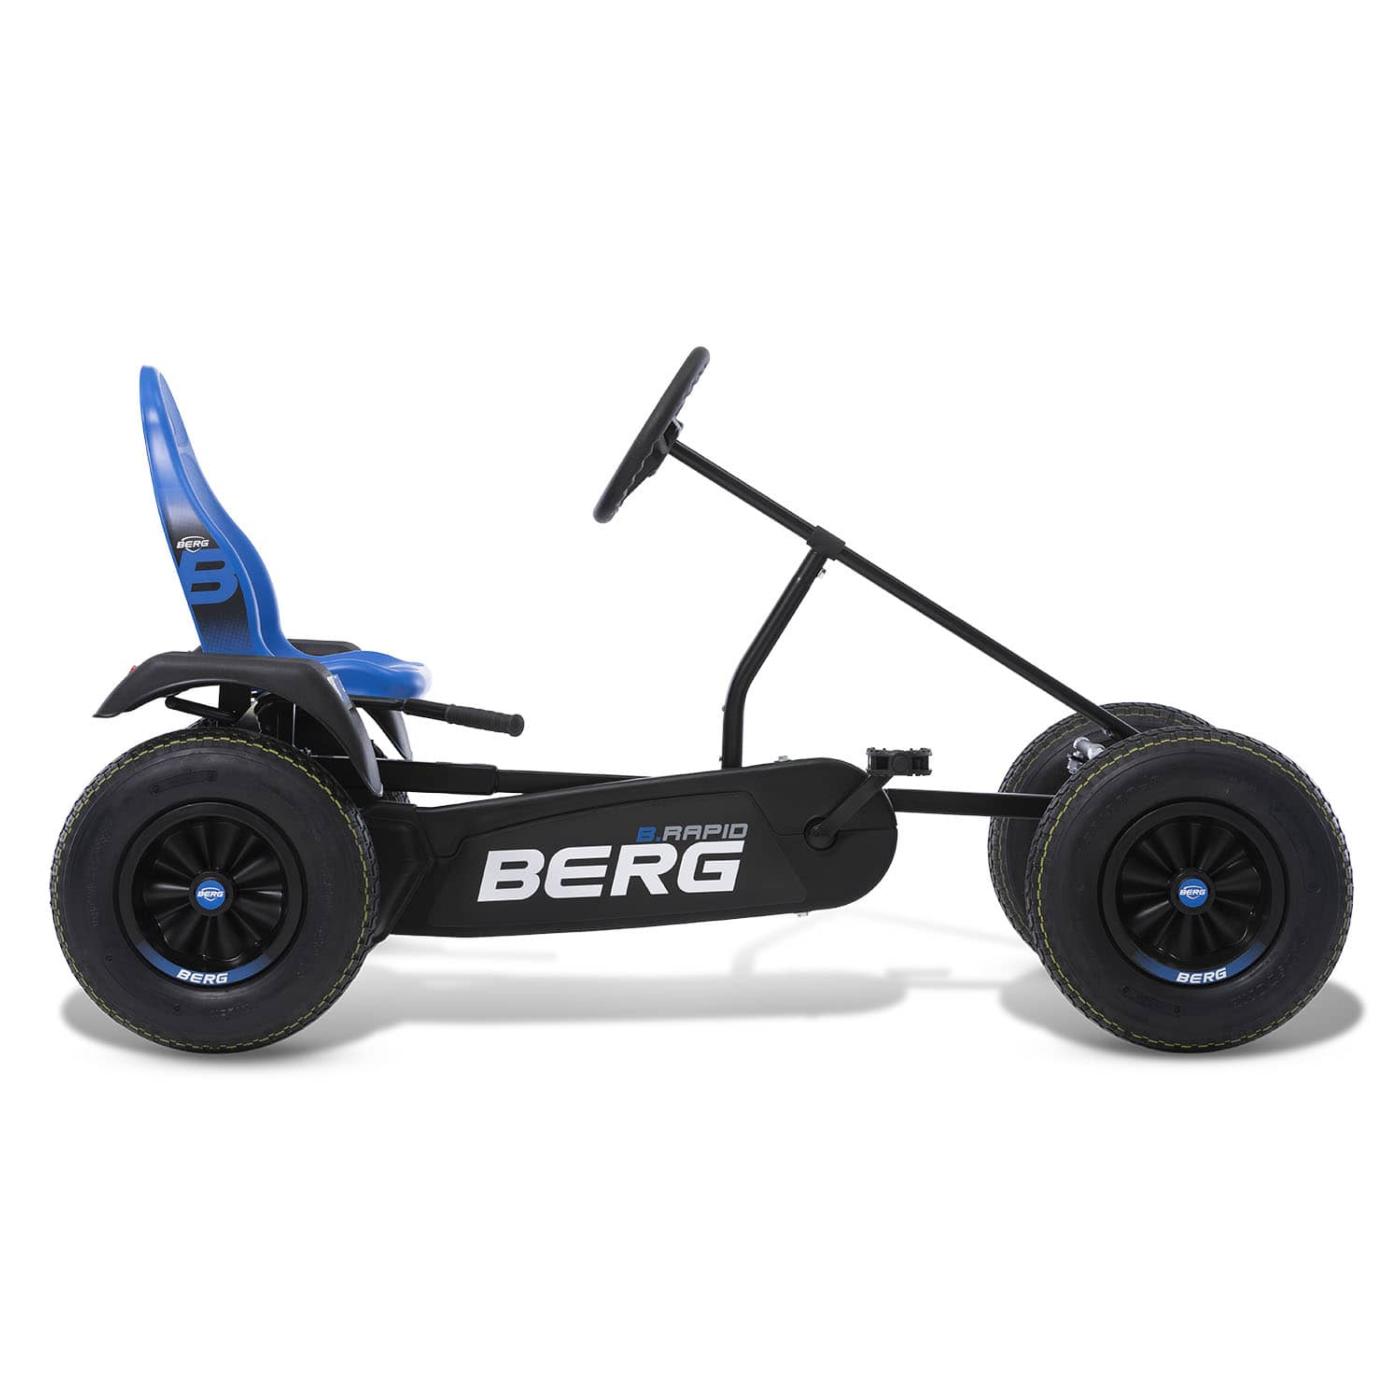 Kart de pedales BERG XL B.Rapid Blue BFR 